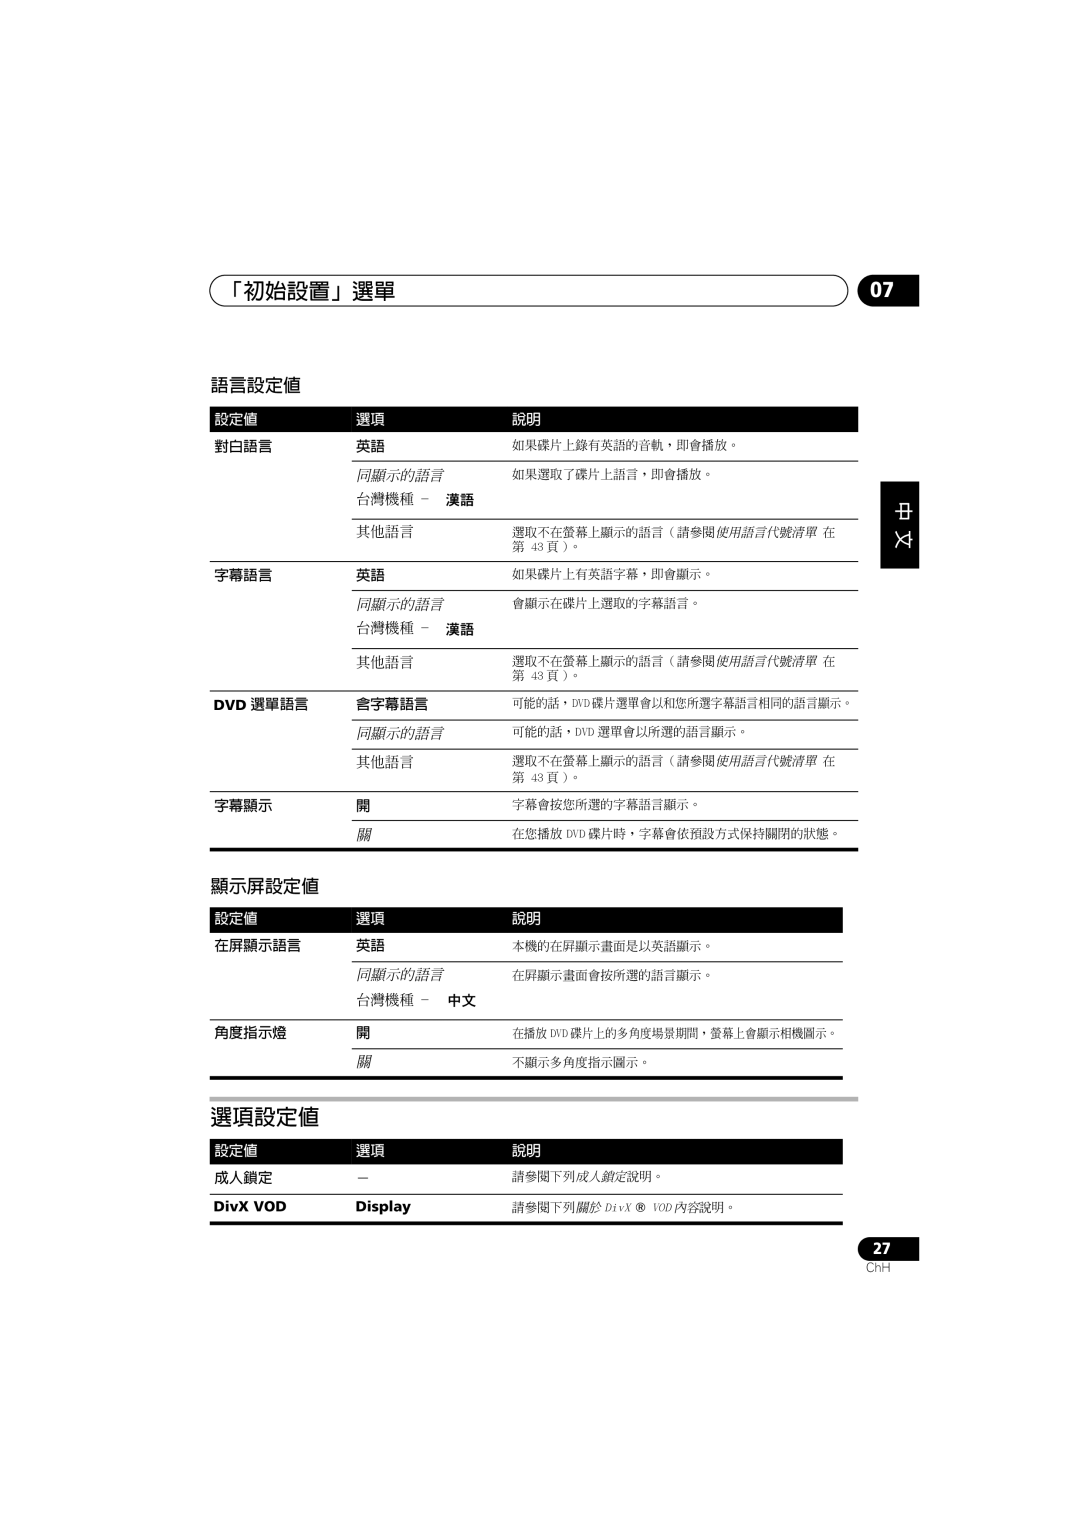 Pioneer XV-DV333, XV-DV434 manual 「初始設置」選單, 選項設定值, 語言設定值, 顯示屏設定值, 對白語言, 同顯示的語言, 含字幕語言, 字幕顯示, 在屏顯示語言, 台灣機種, 角度指示燈, 成人鎖定 